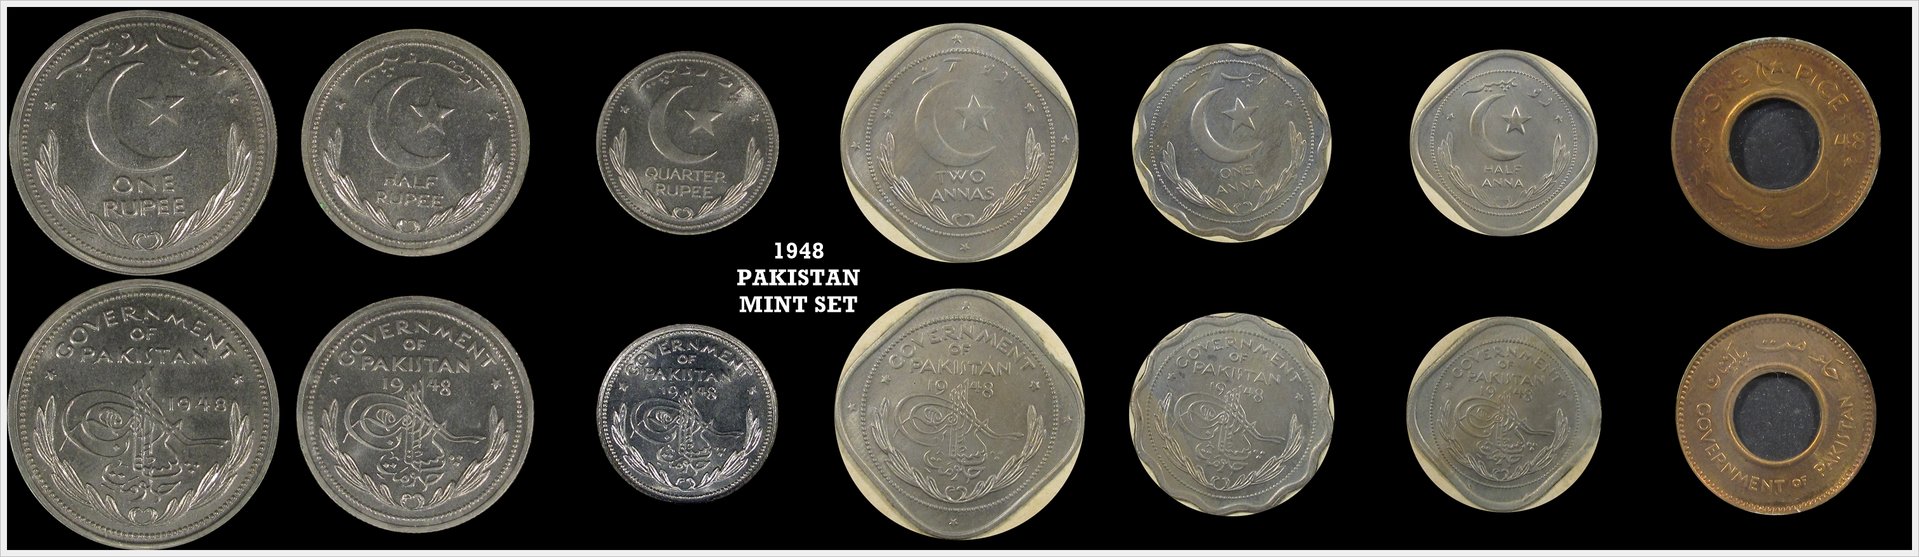 Pakistan 1948 Mint Set.jpg